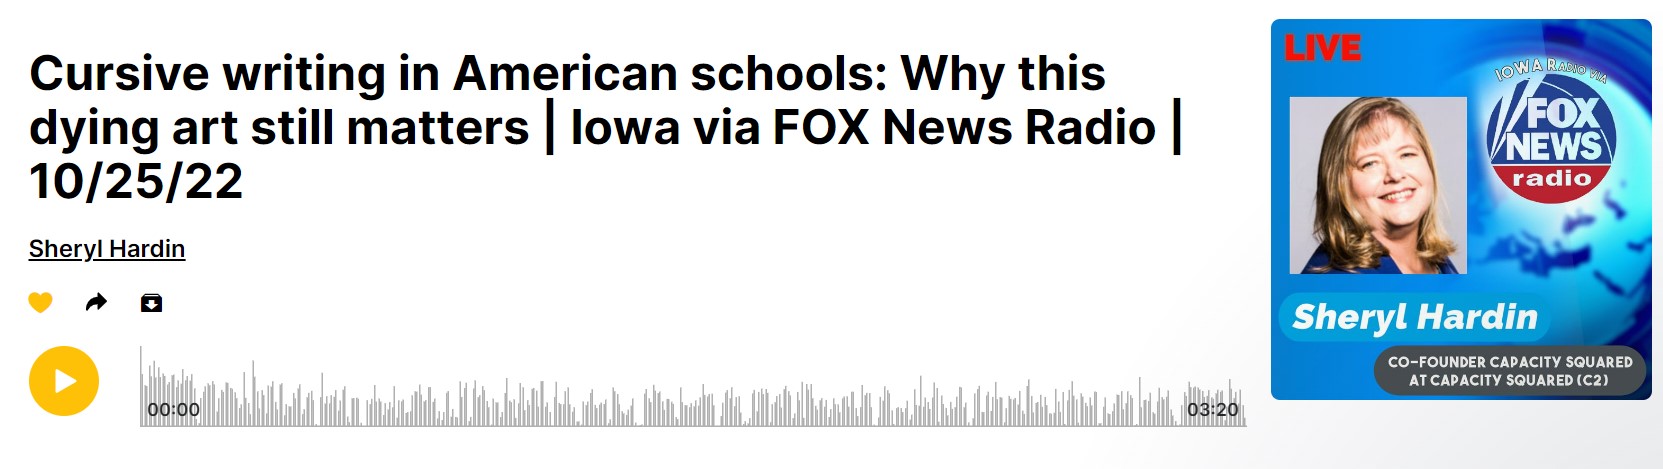 Fox News iHeart Radio Cursive writing in American Schools with Sheryl Hardin